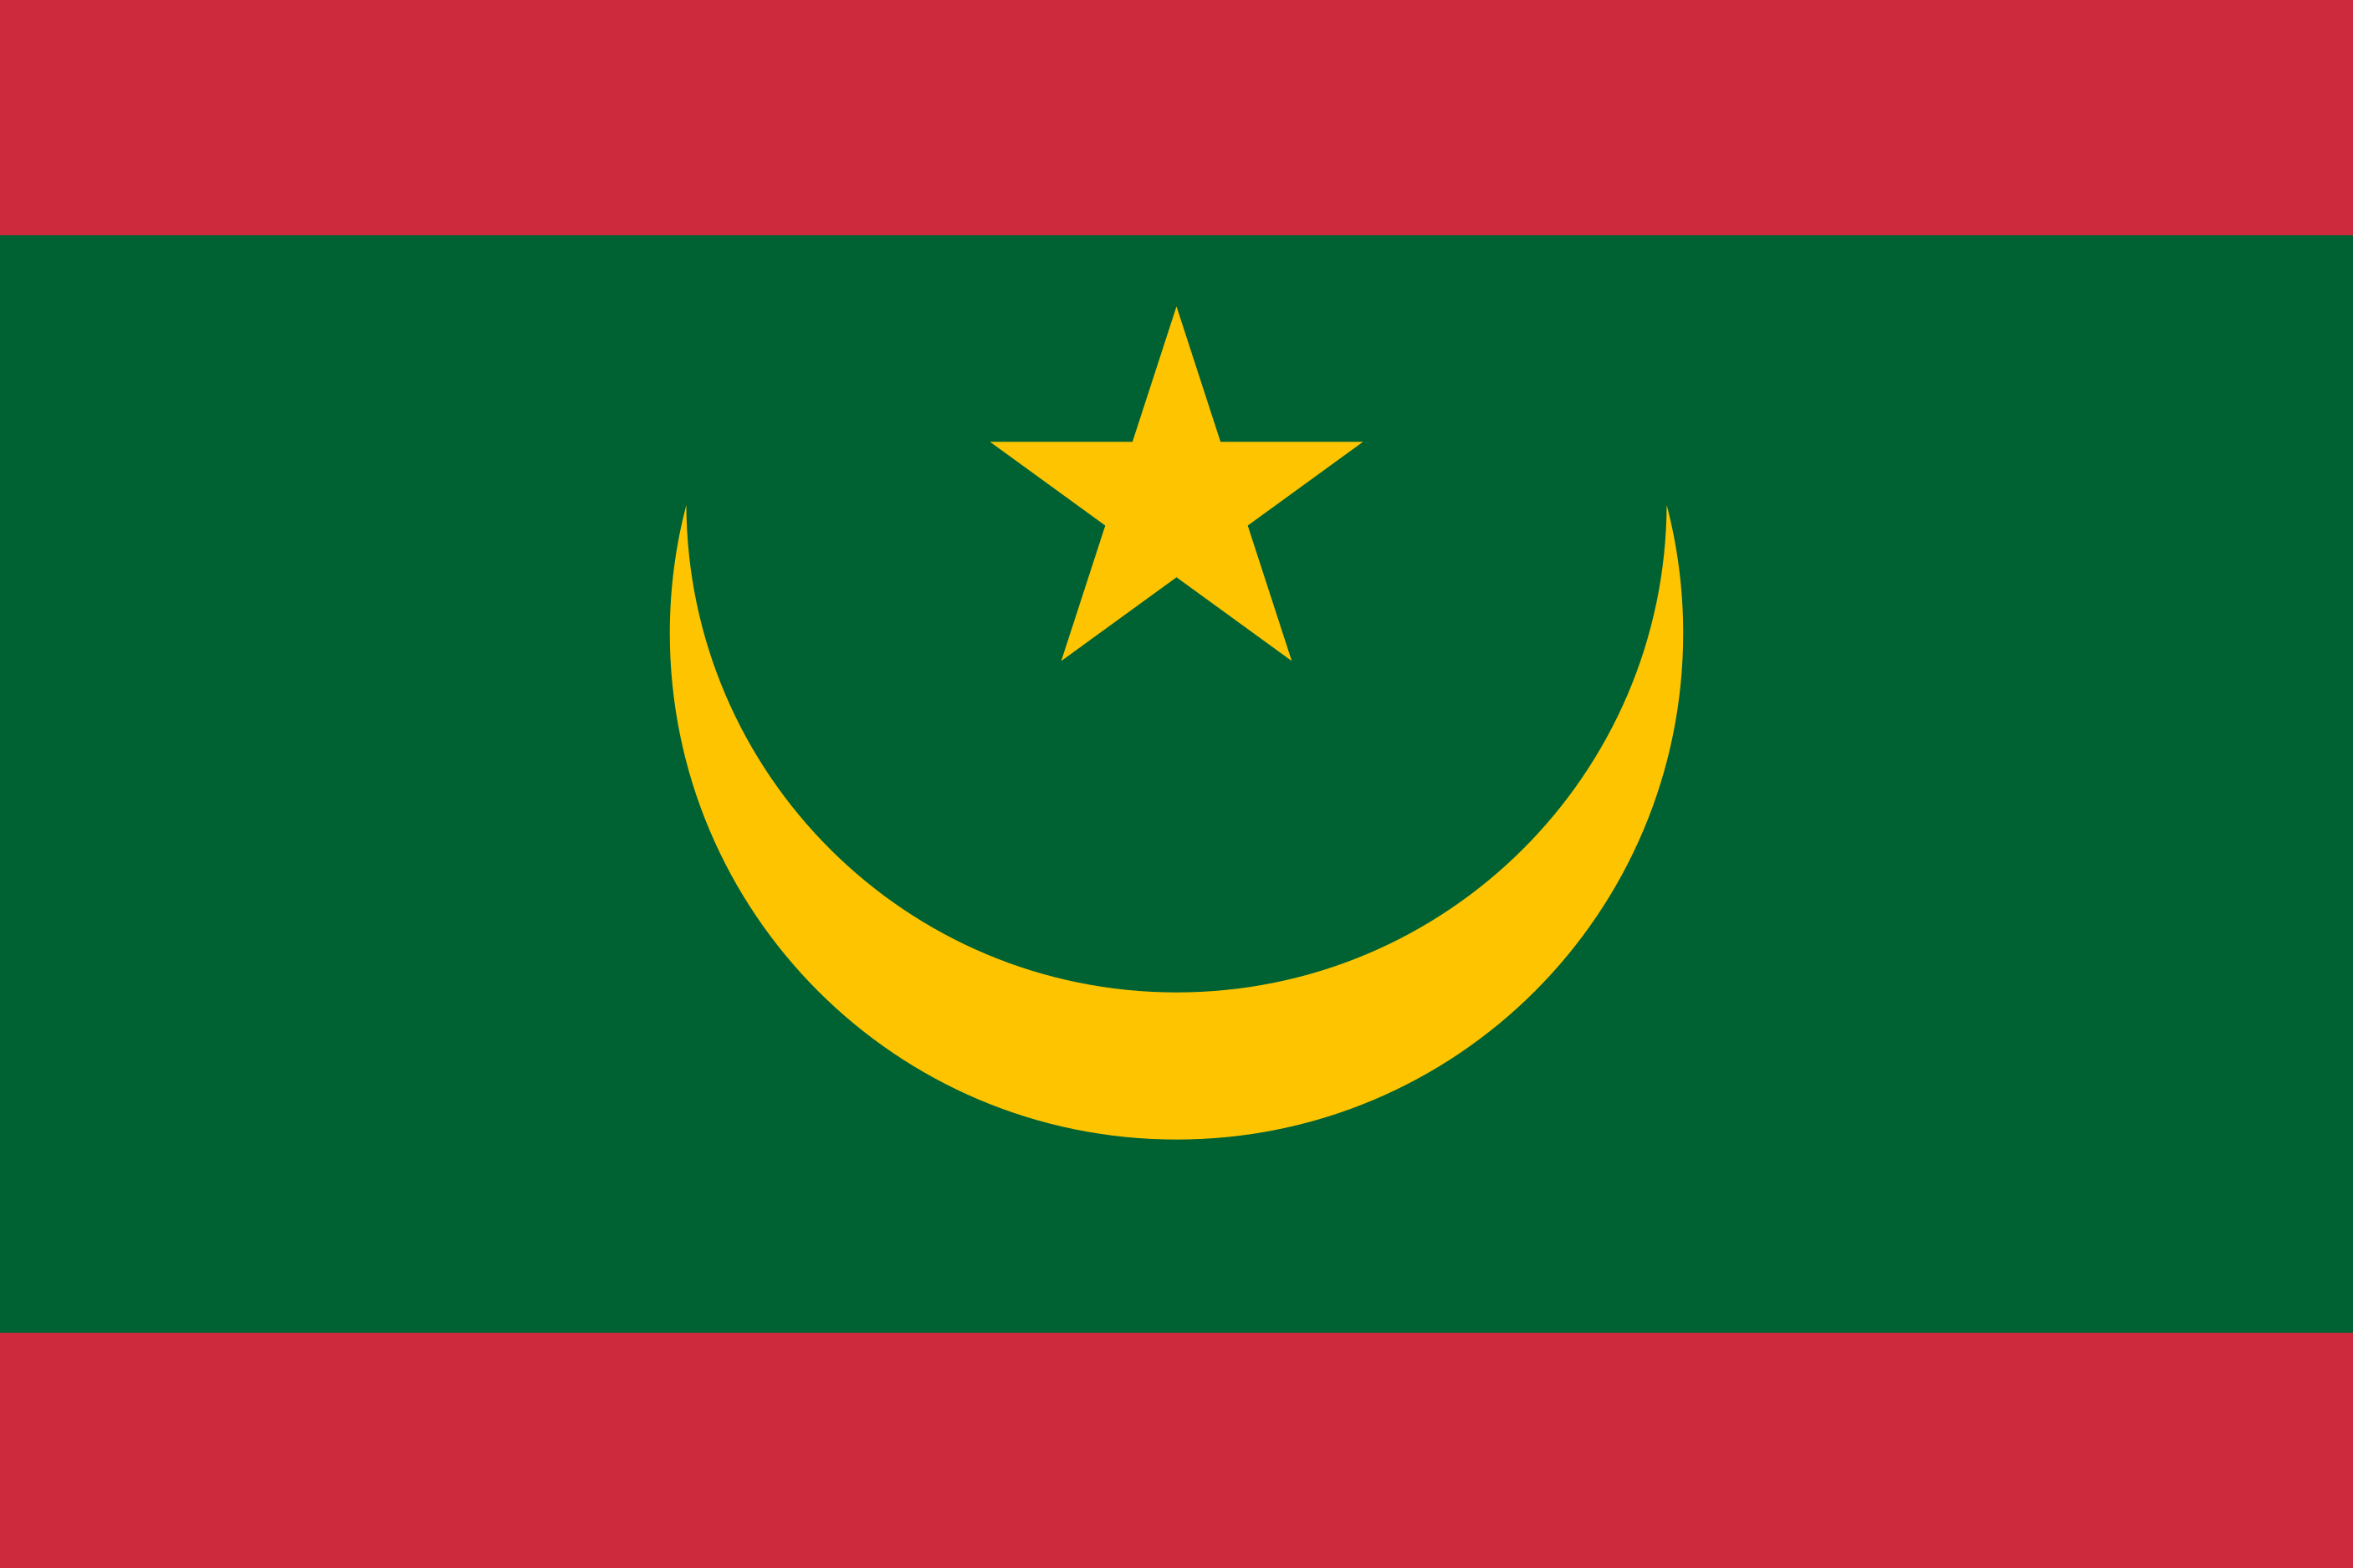 Free Mauritania Flag Documents: PDF, DOC, DOCX, HTML & More